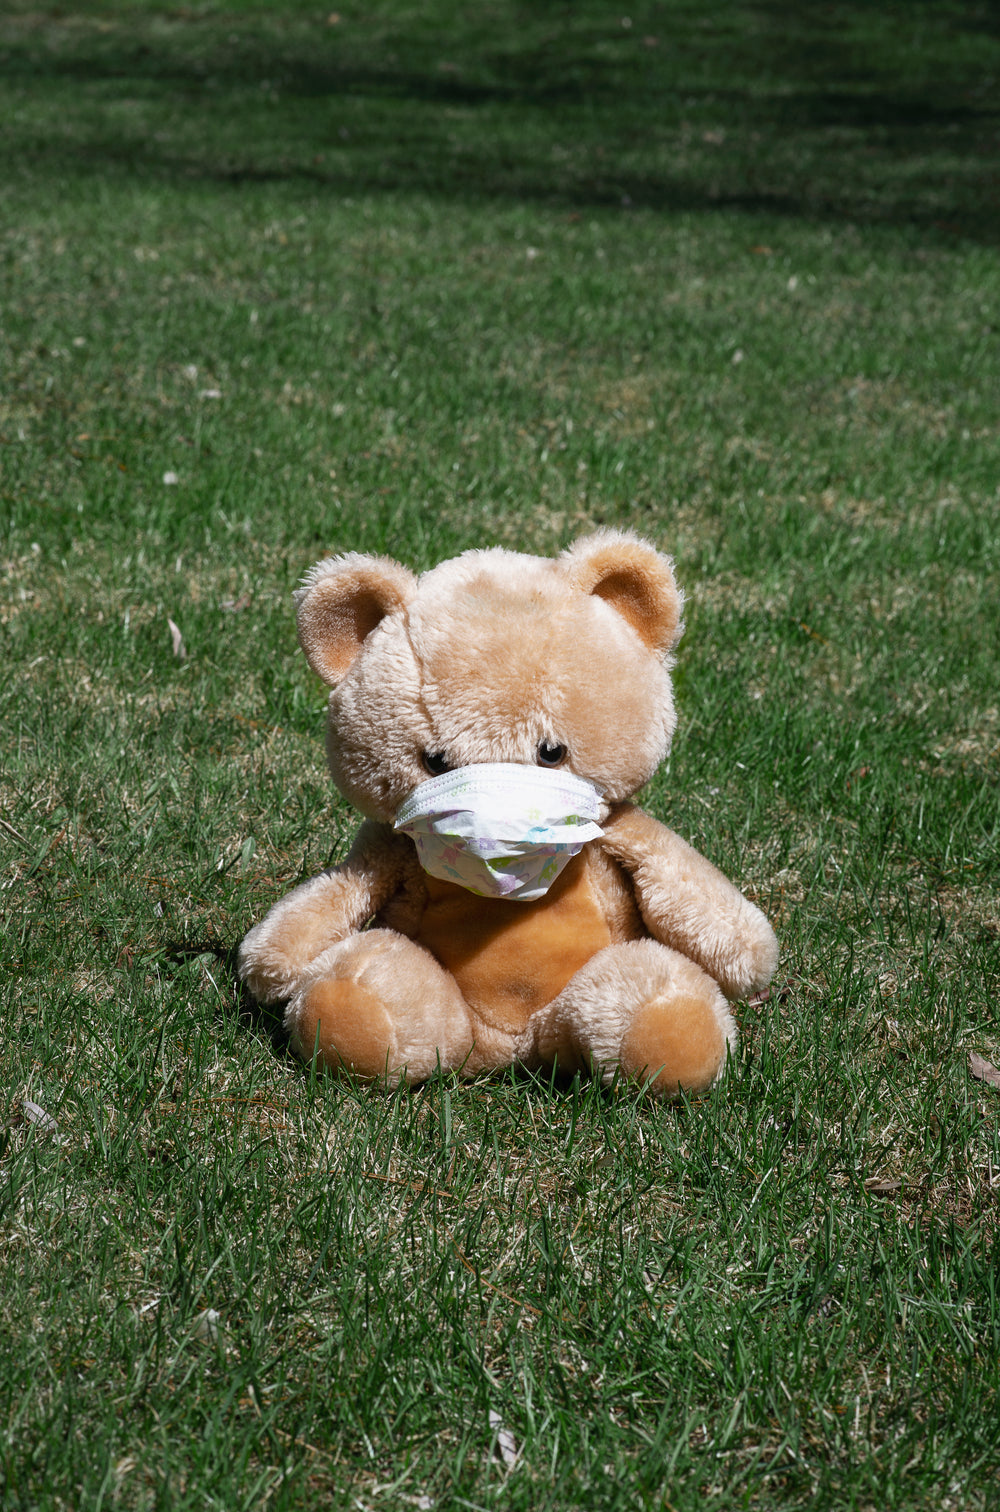 teddy bear on the grass with a face mask